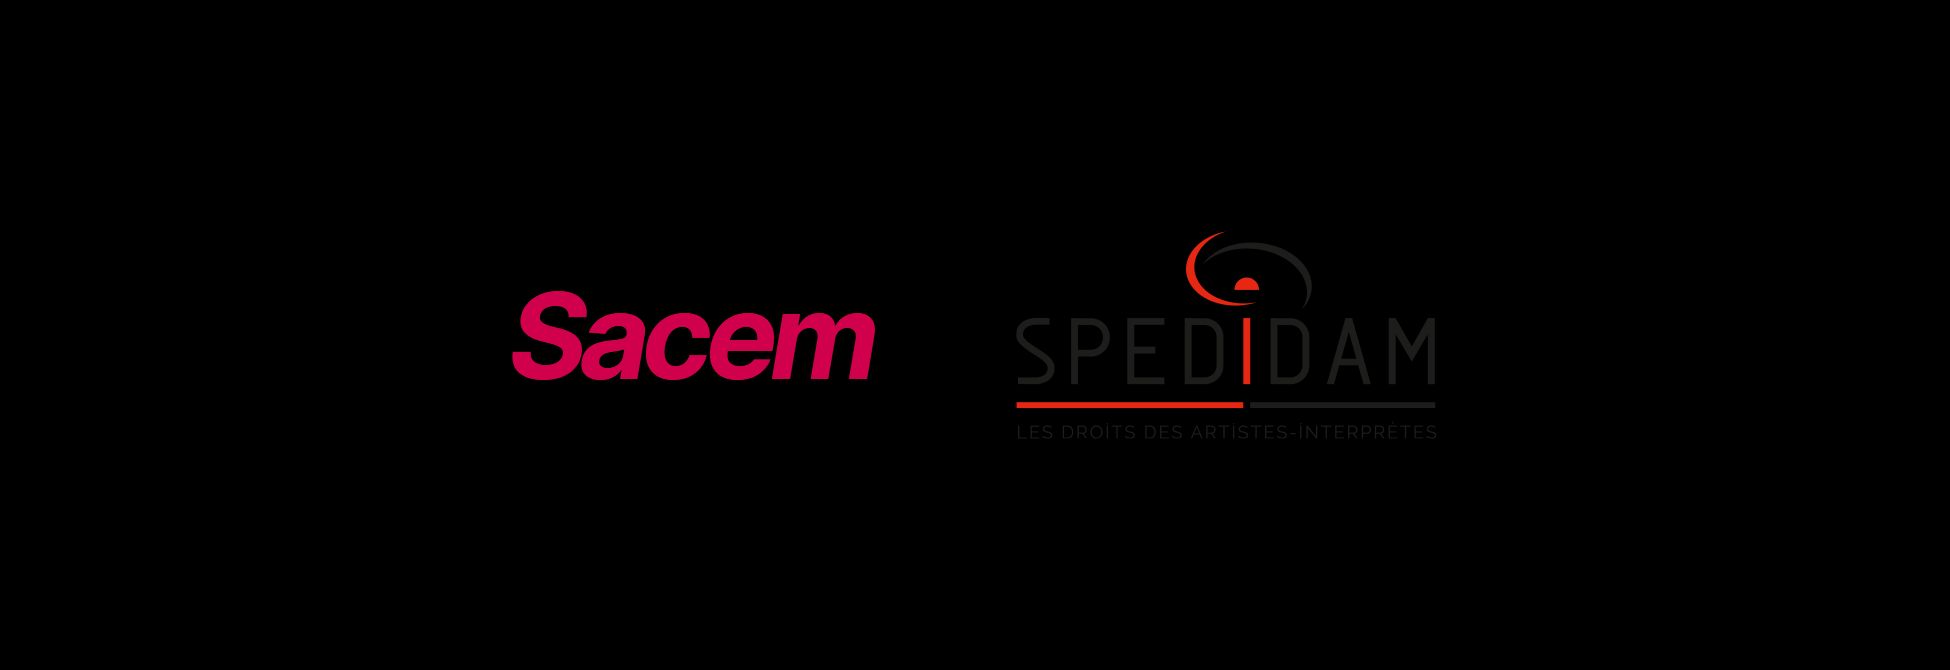 SACEM vs SPEDIDAM - RightsNow!